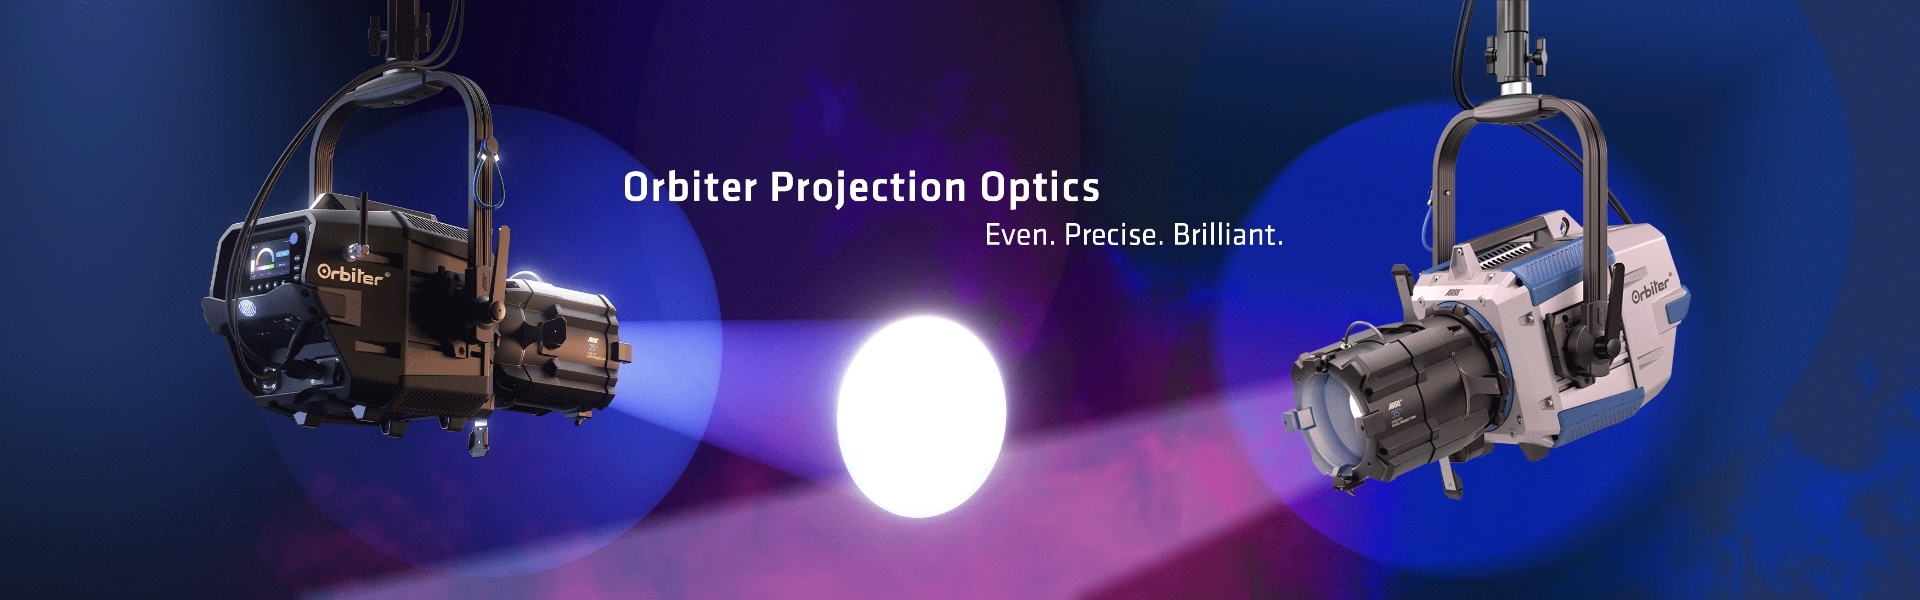 Projection orbiter